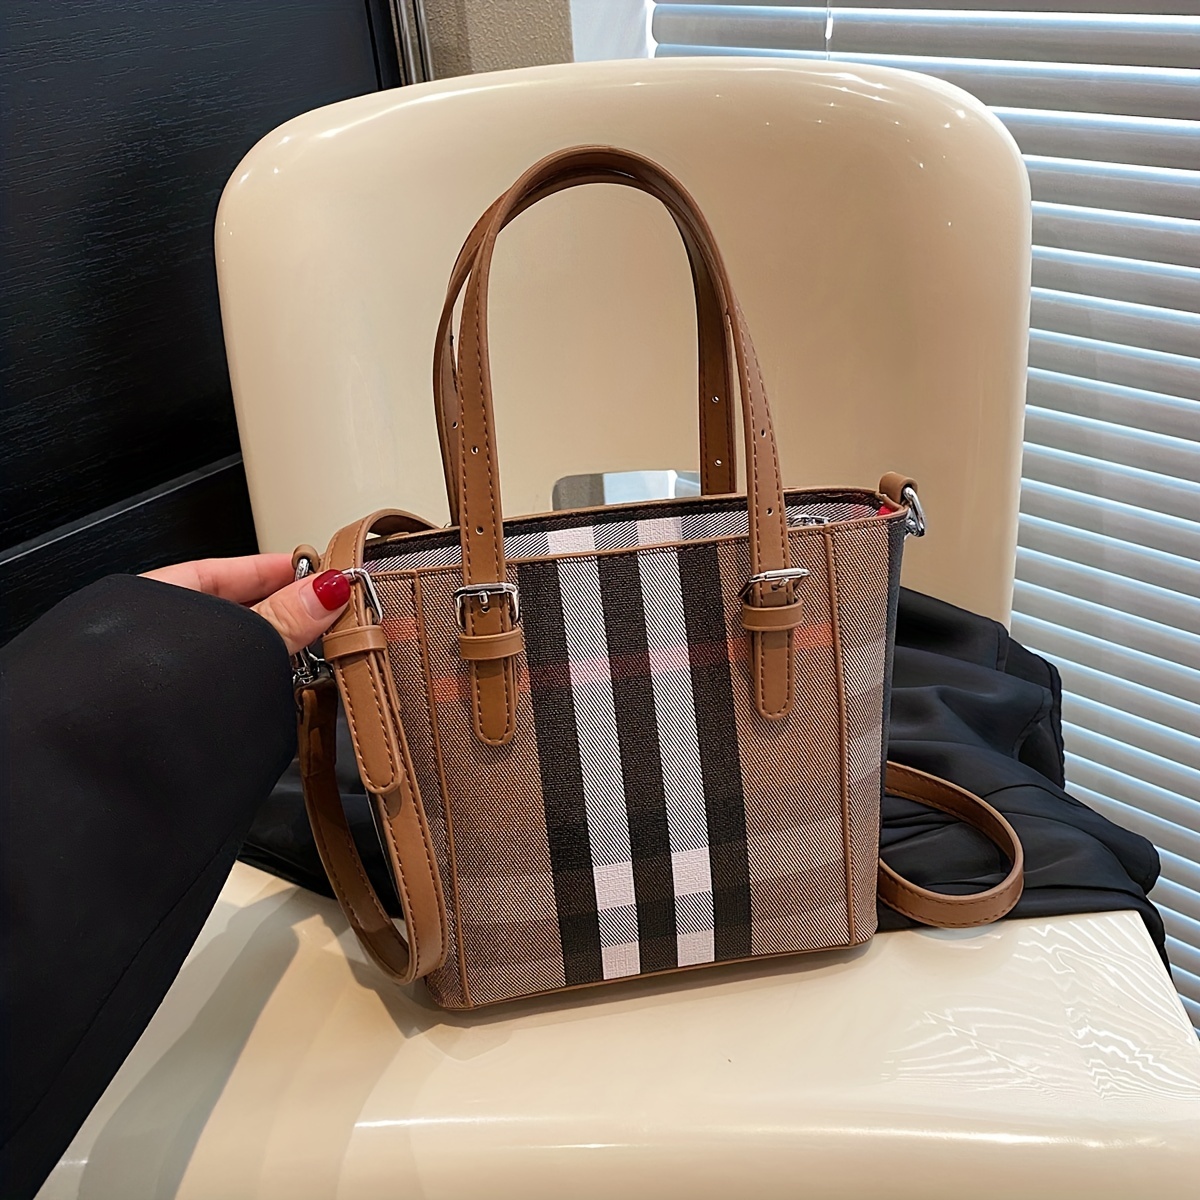 Luxury Checkered Handbag For Women, Fashion Colorblock Crossbody